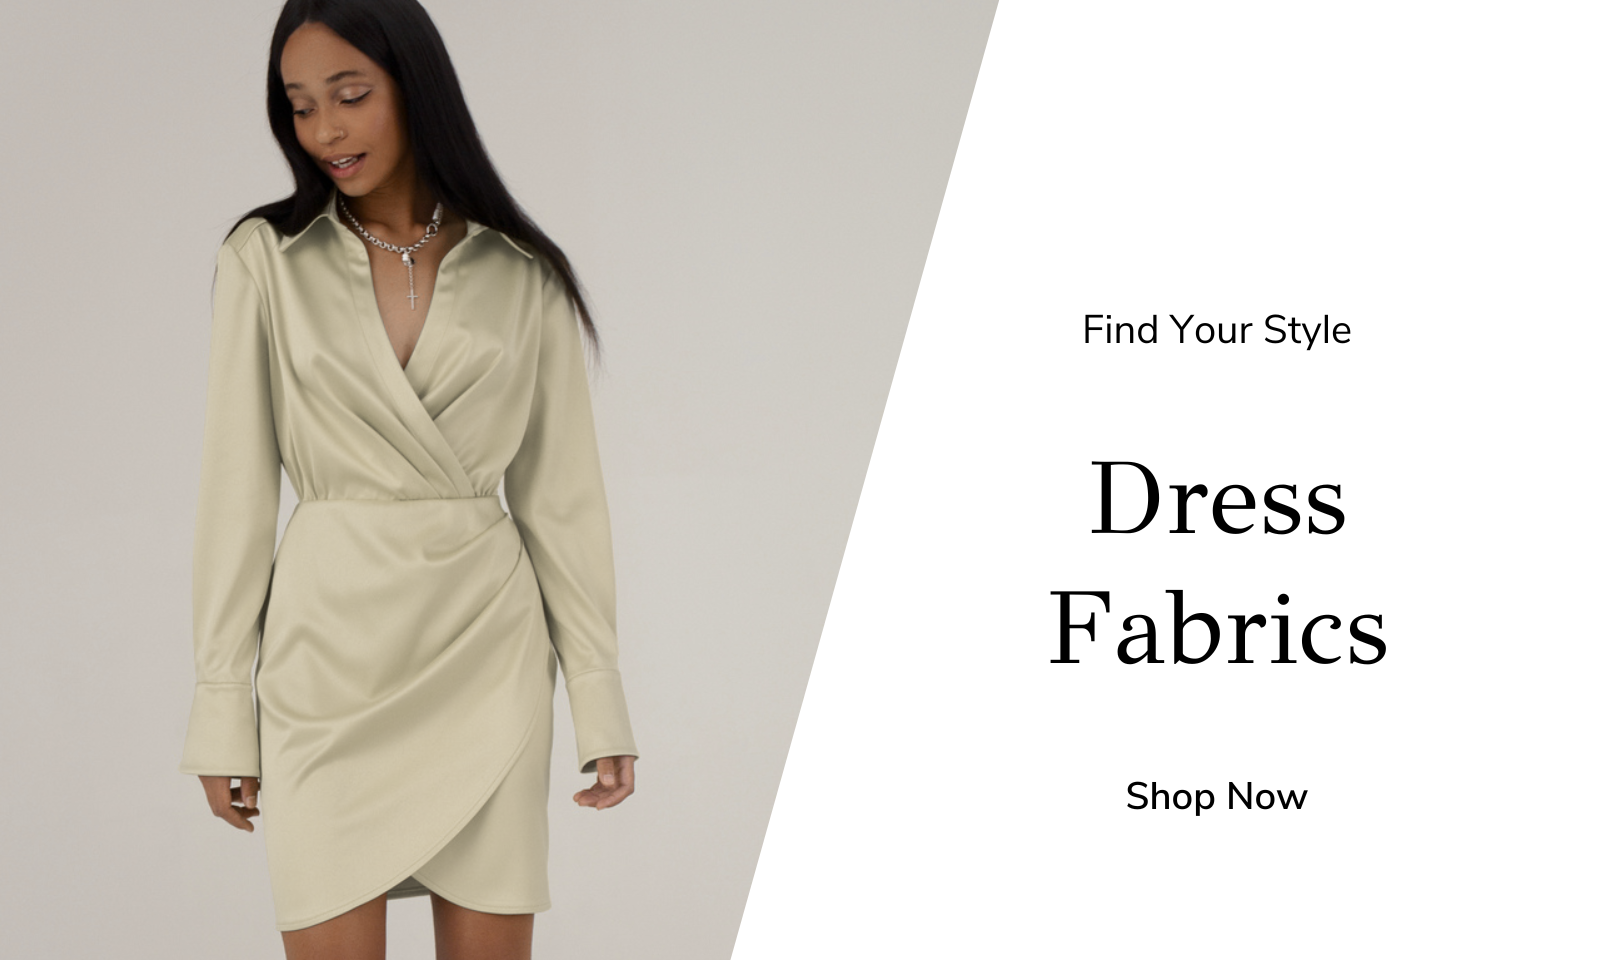 Fabric Shop Online, Dress Craft Fabric Patterns Haberdashery